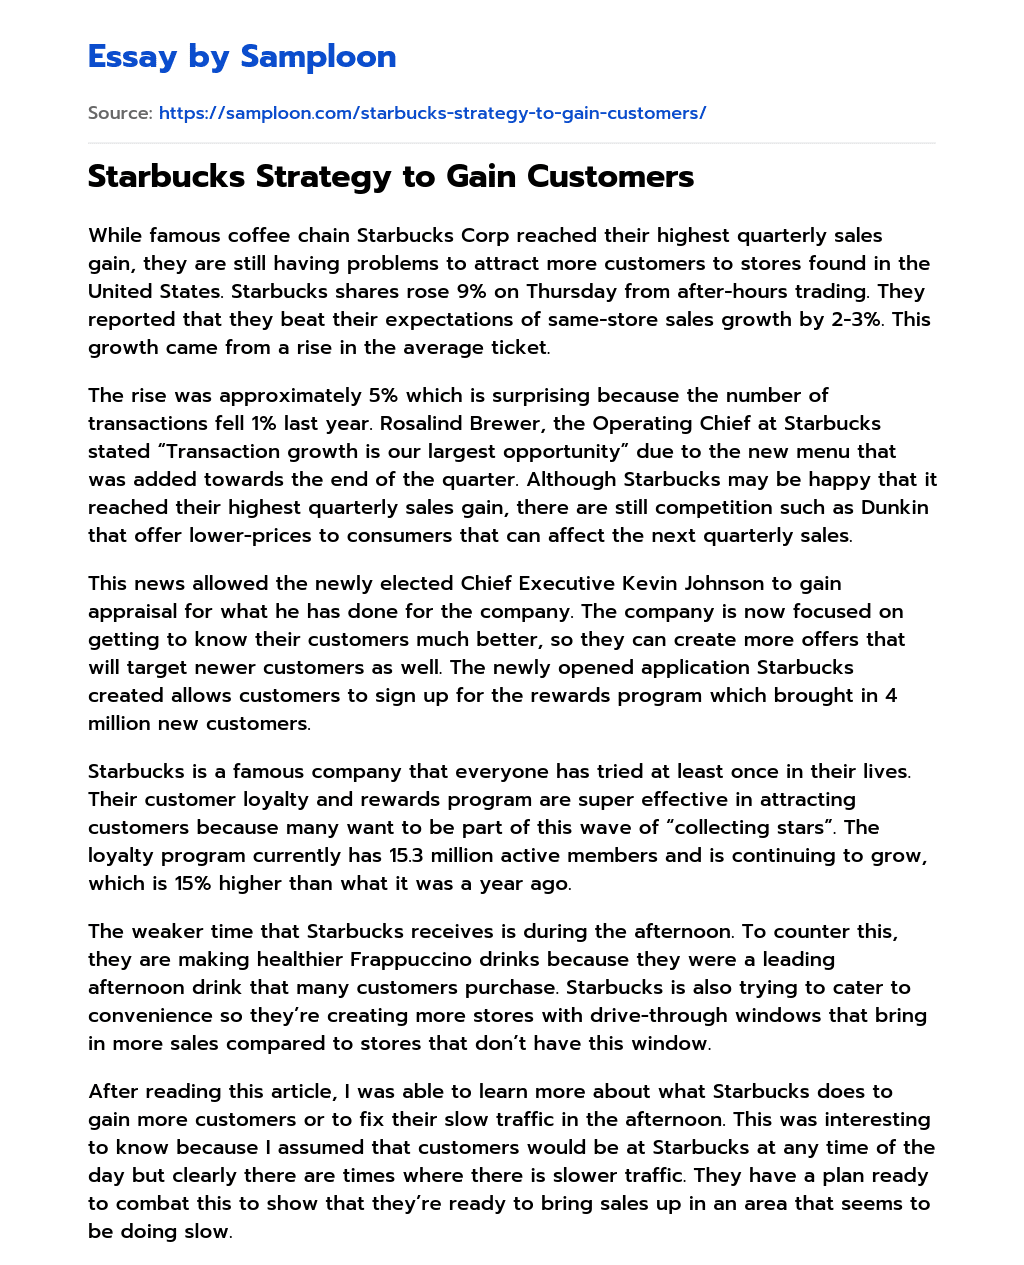 Starbucks Strategy to Gain Customers essay